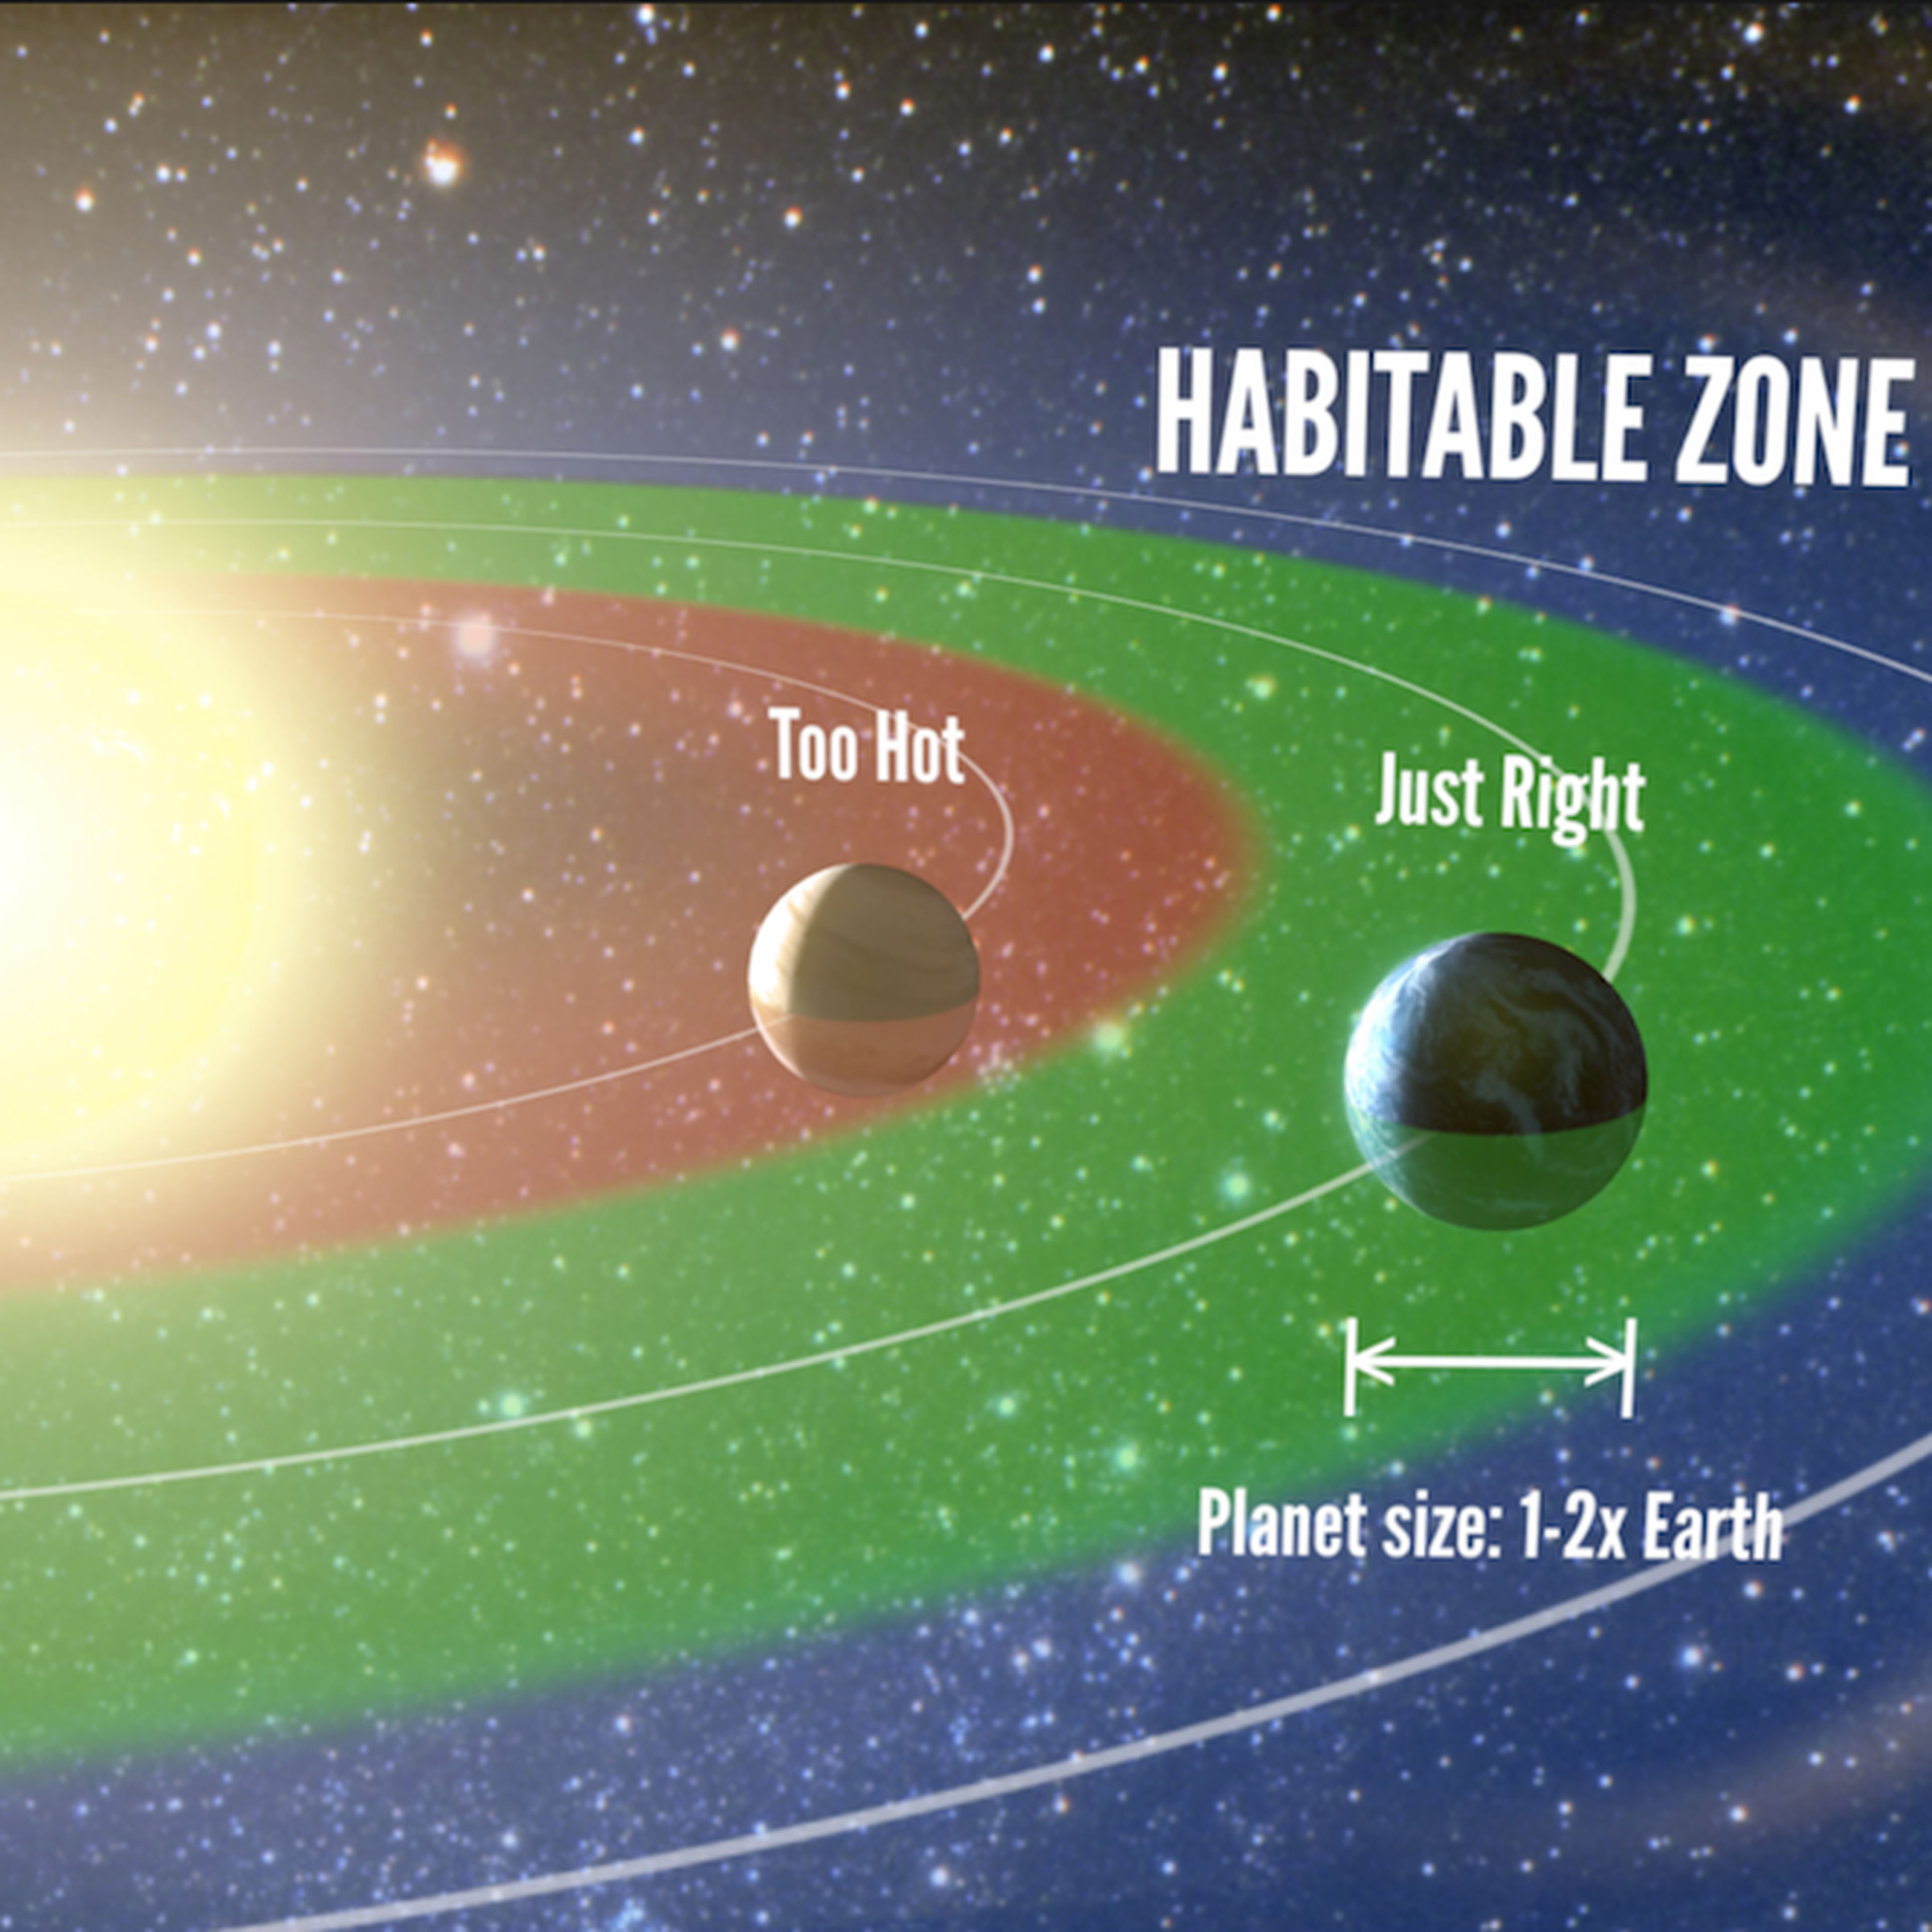 Habitable zones